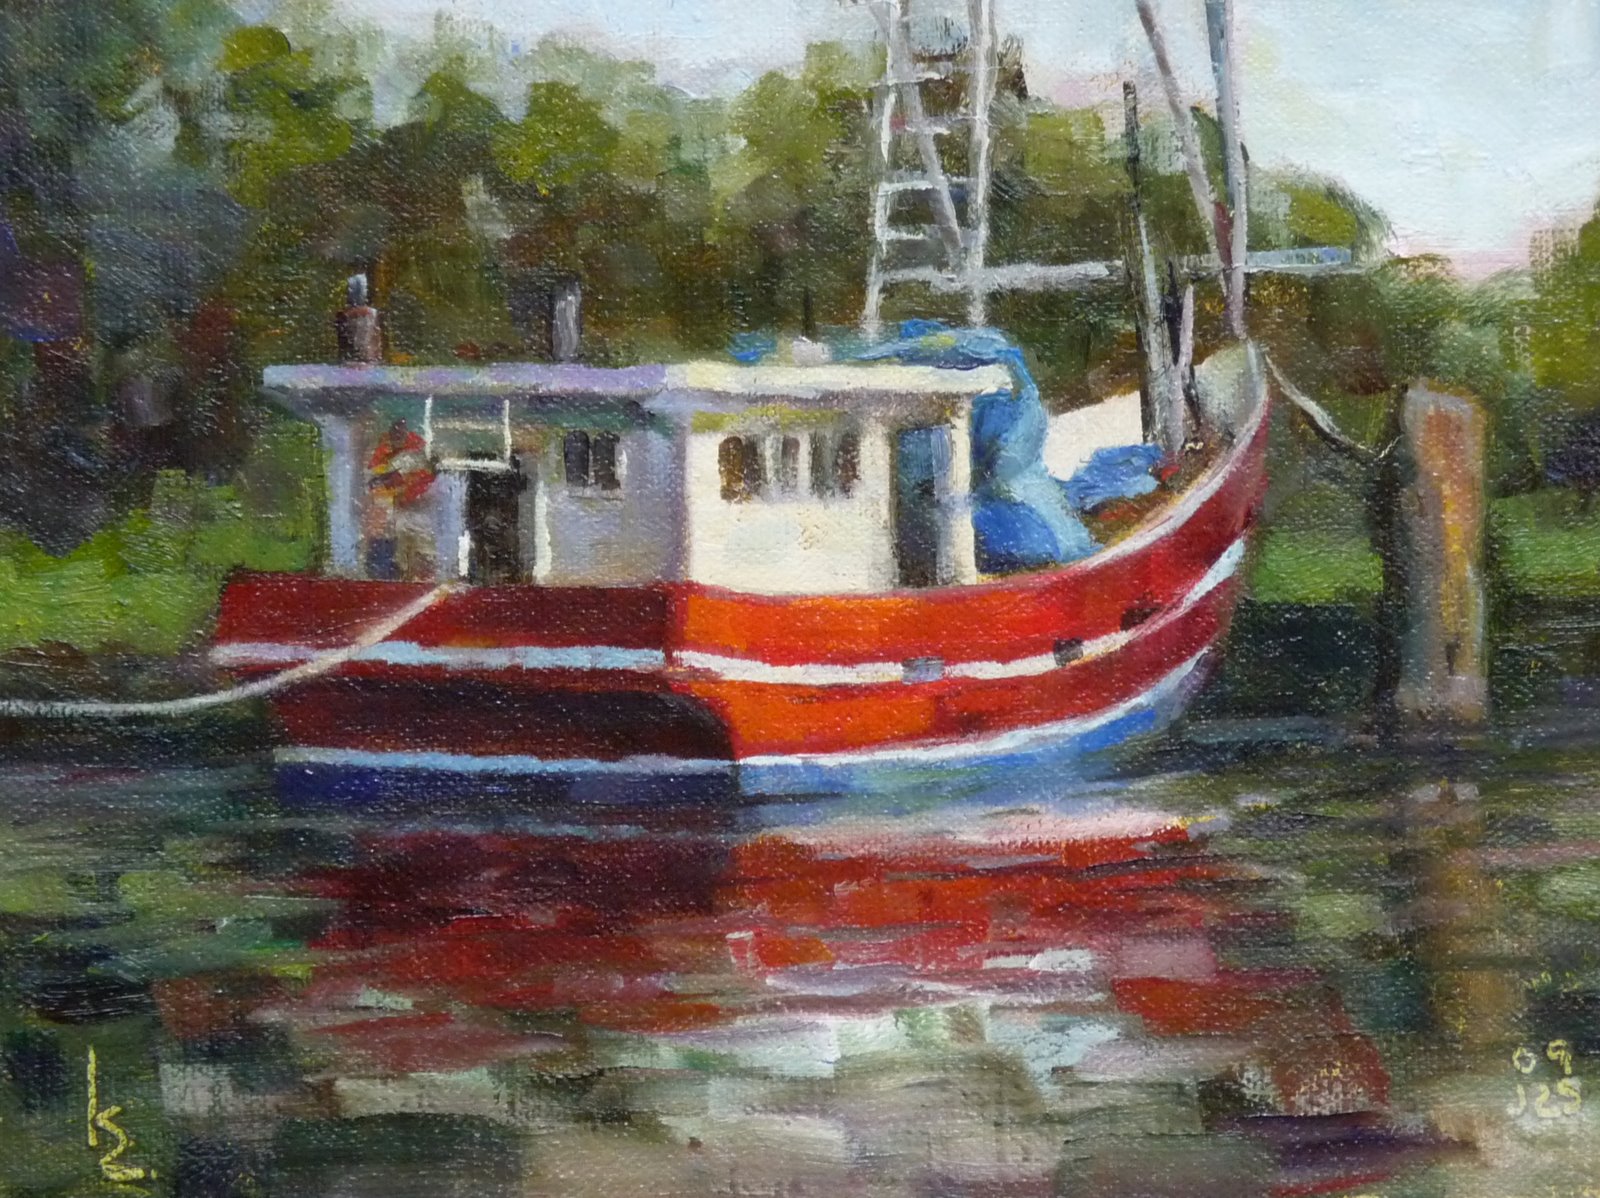 [shrimpboat+paintings+008.JPG]